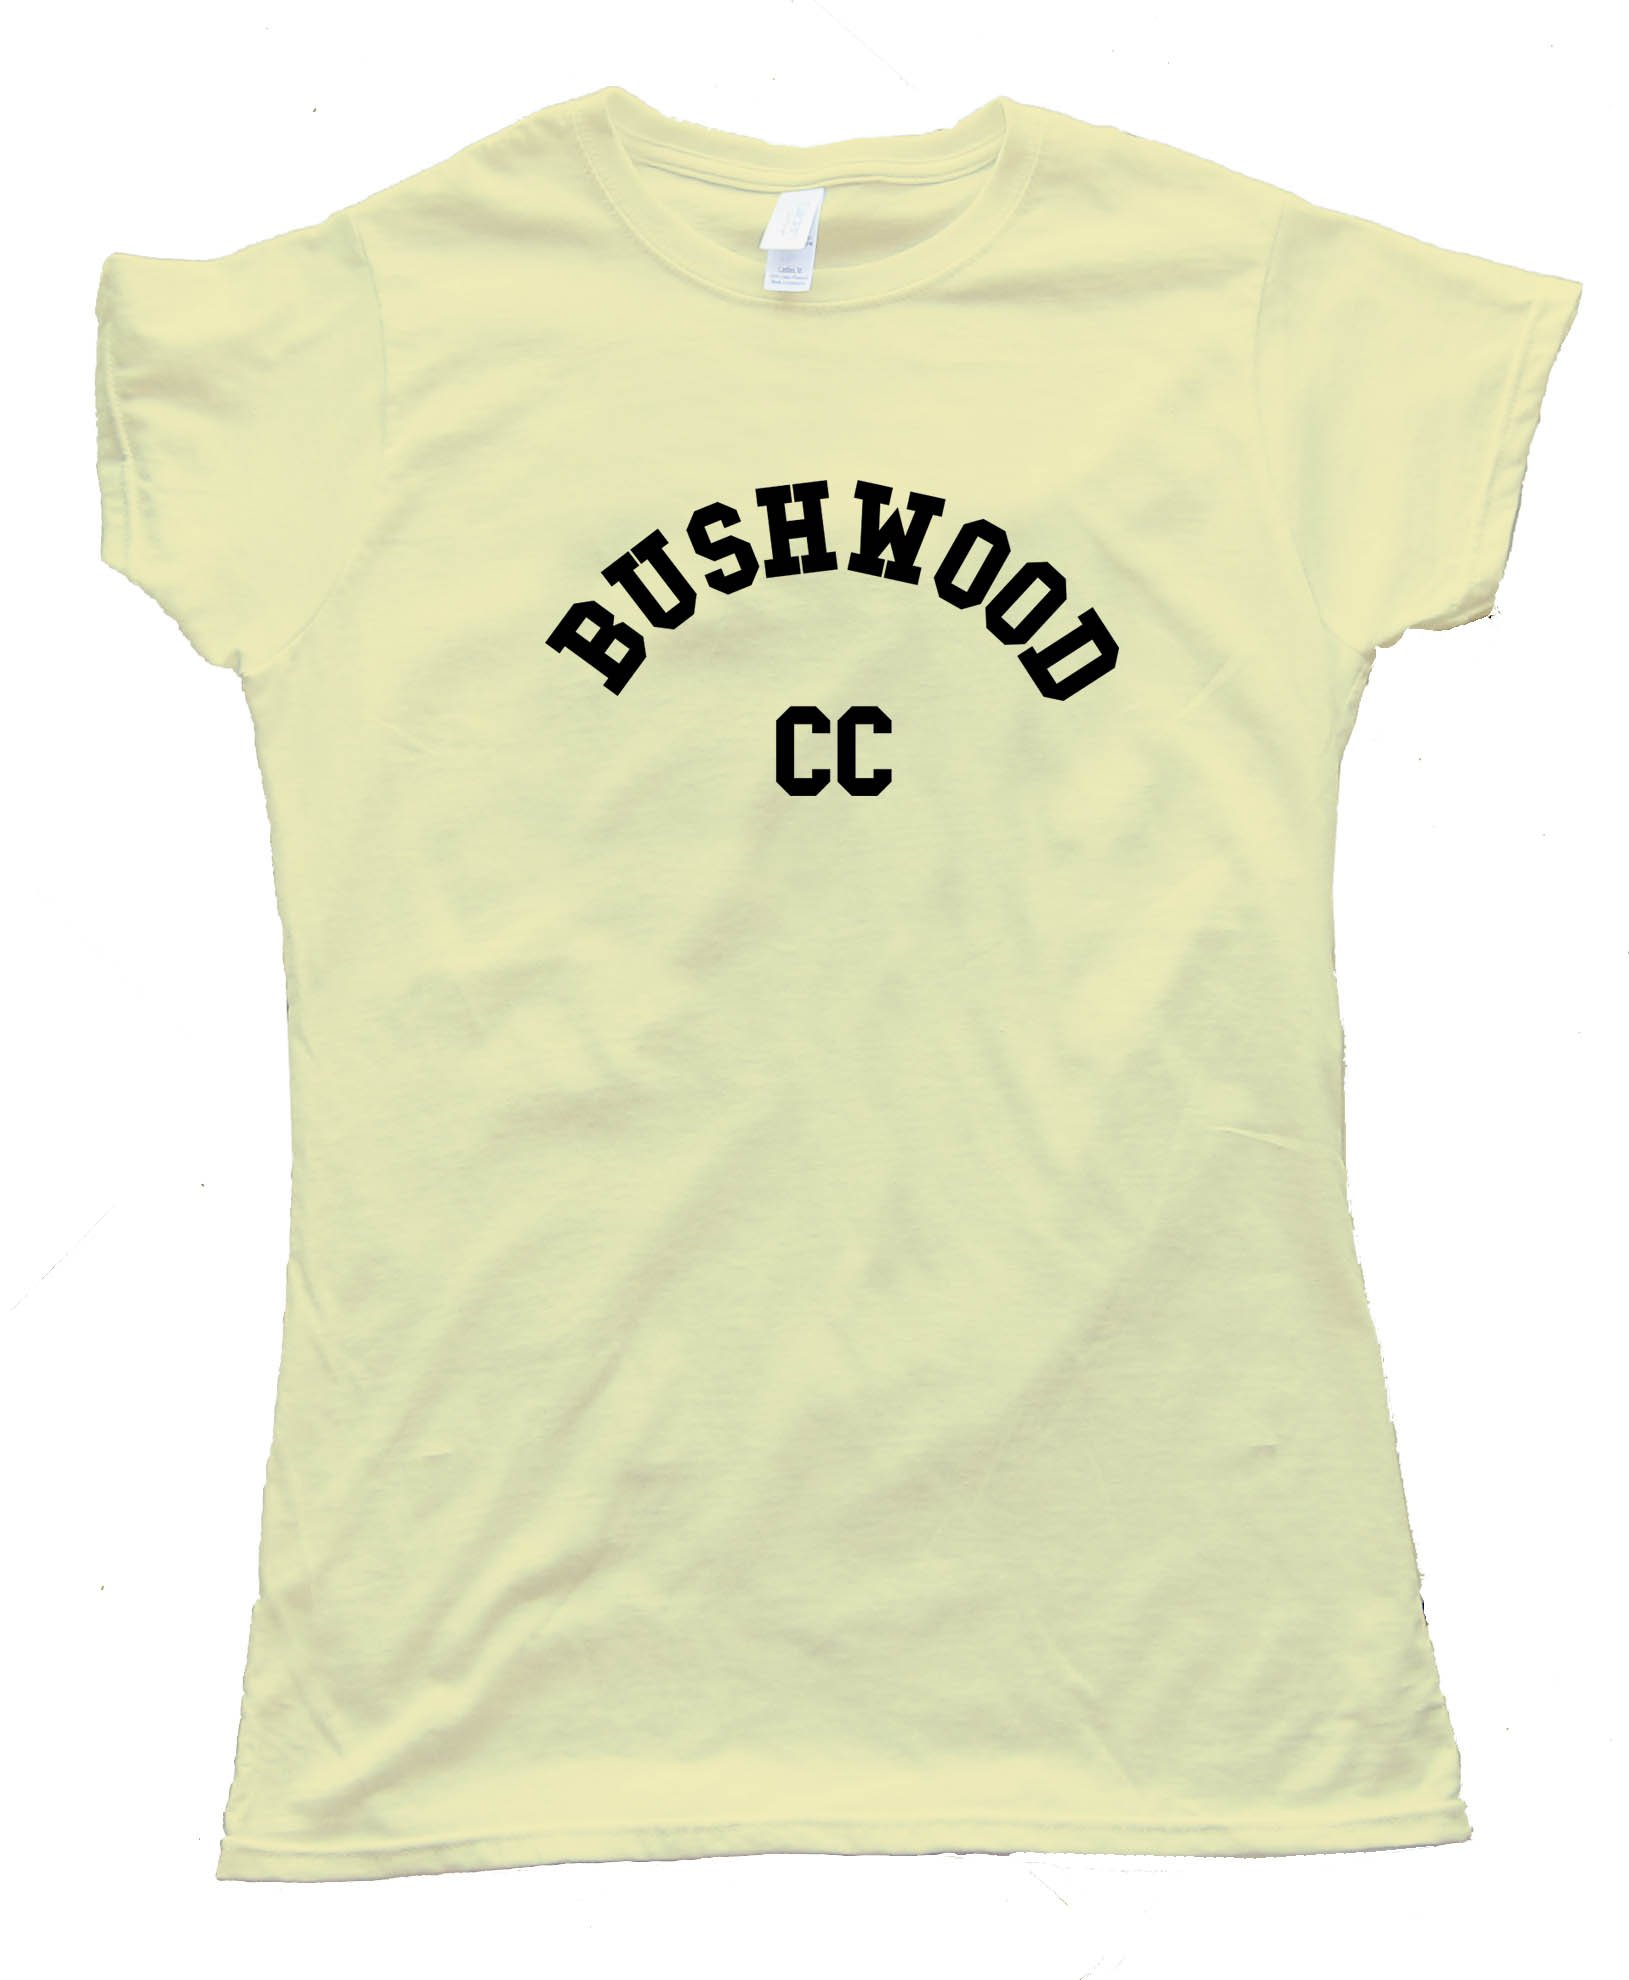 Womens Bushwood Country Club Caddyshack - Tee Shirt